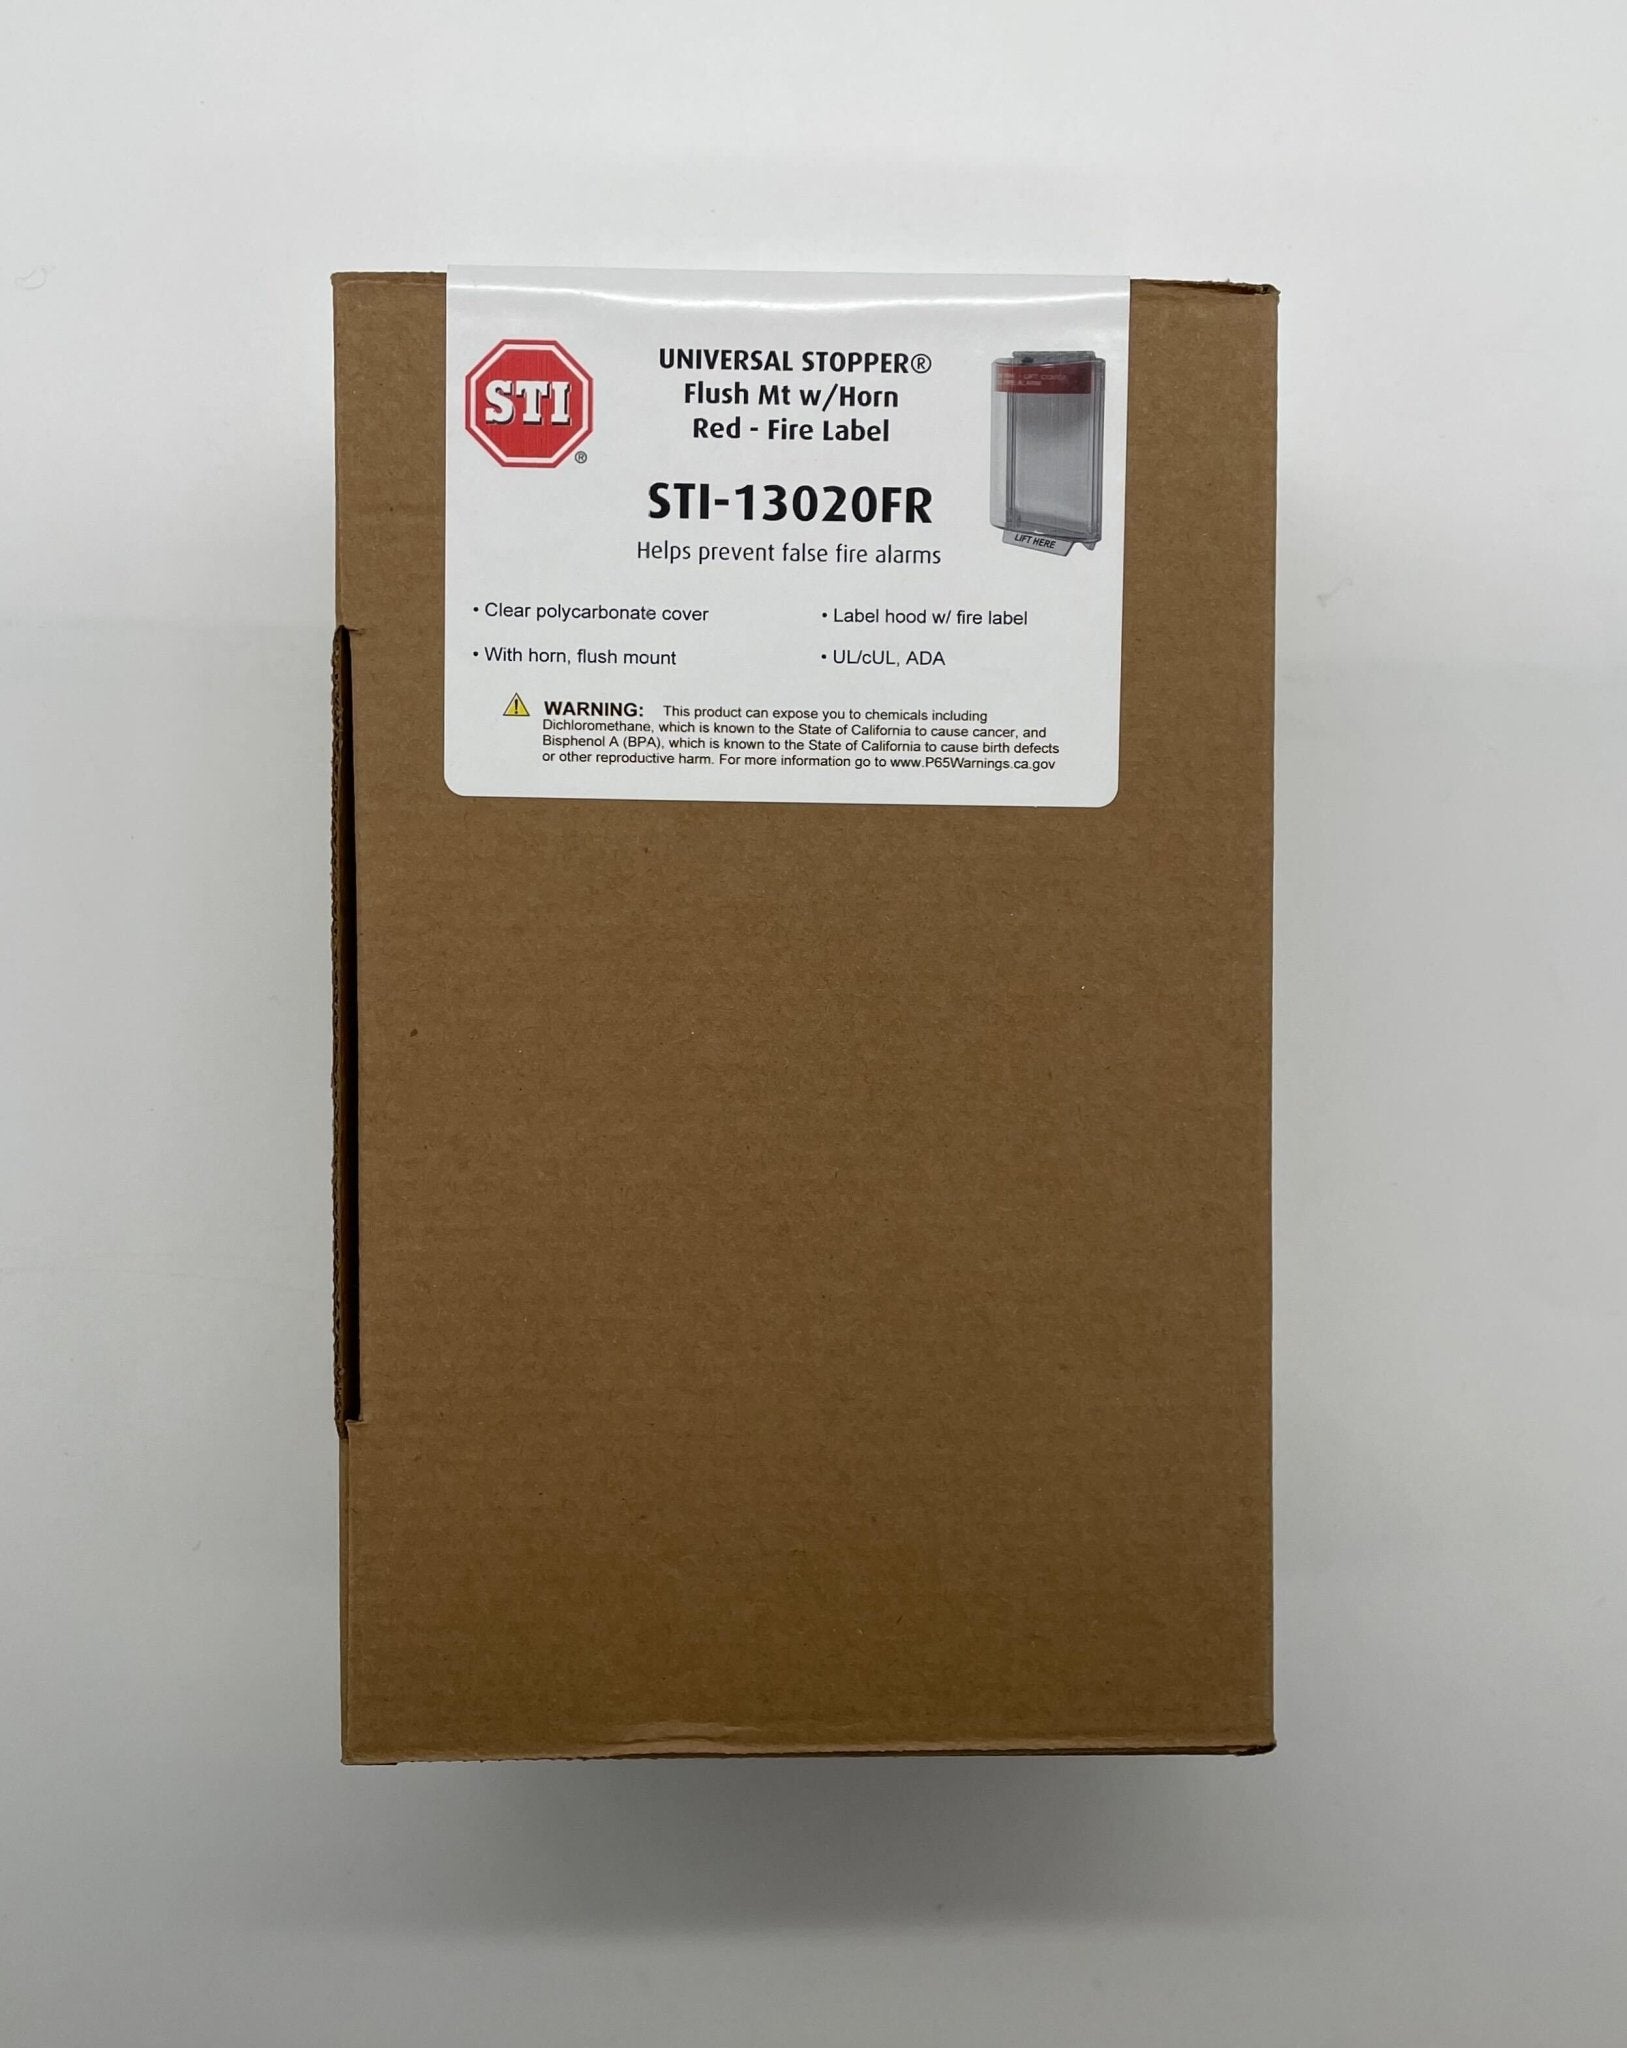 STI-13020FR Safety Technology Universal Stopper w/Horn, Flush Mount, Fire Label - The Fire Alarm Supplier